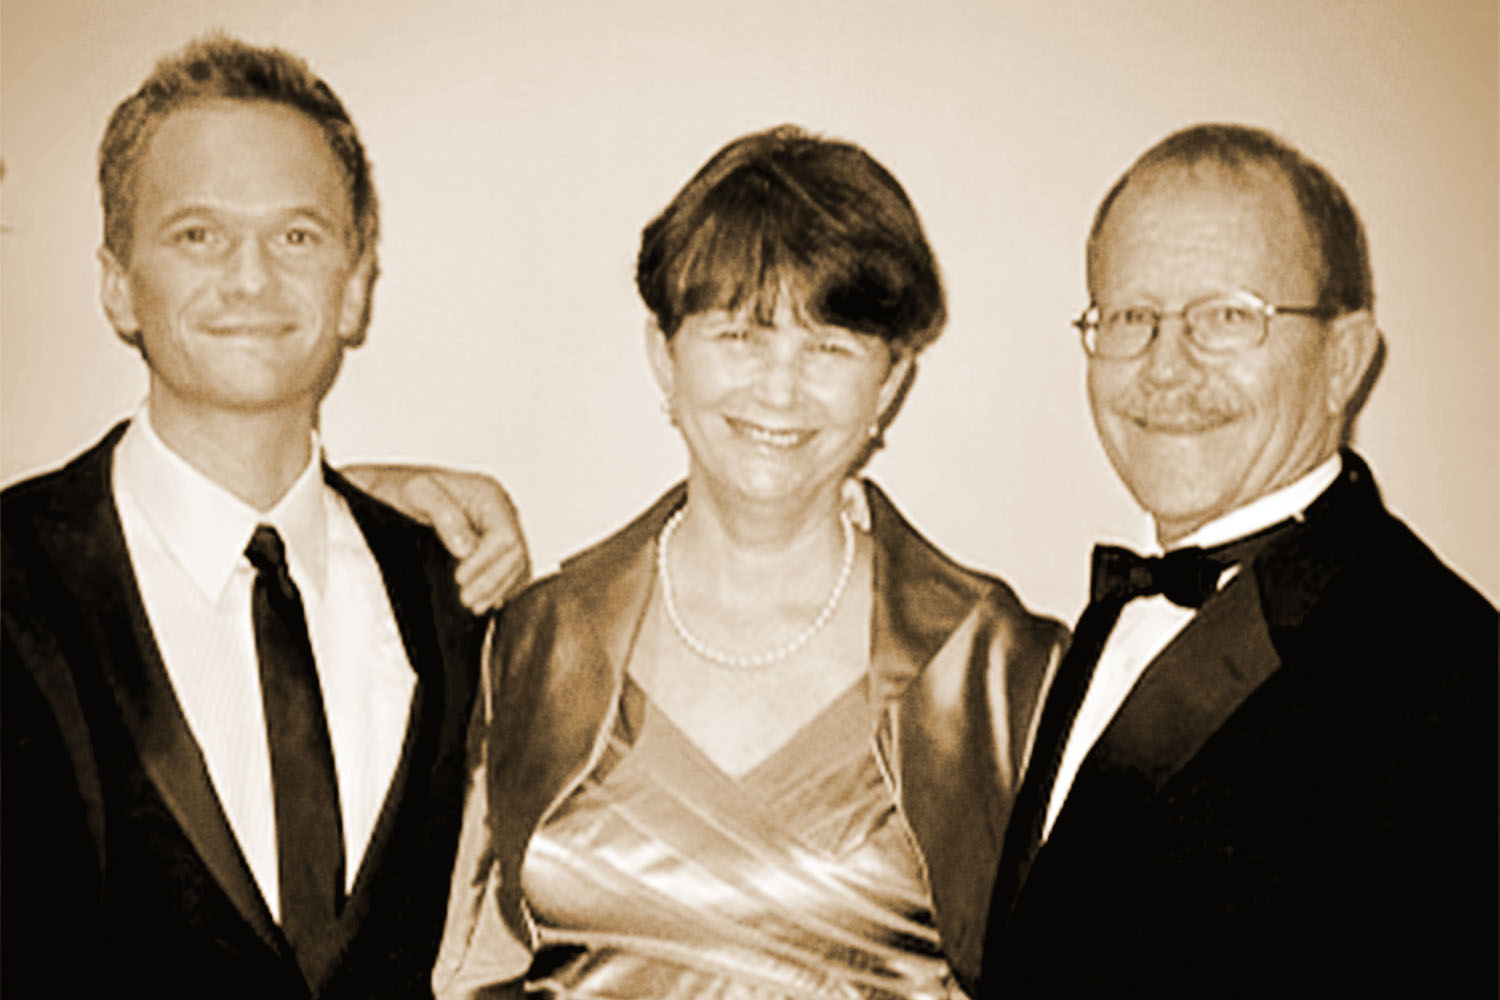 Neil Patrick Harris and his parents